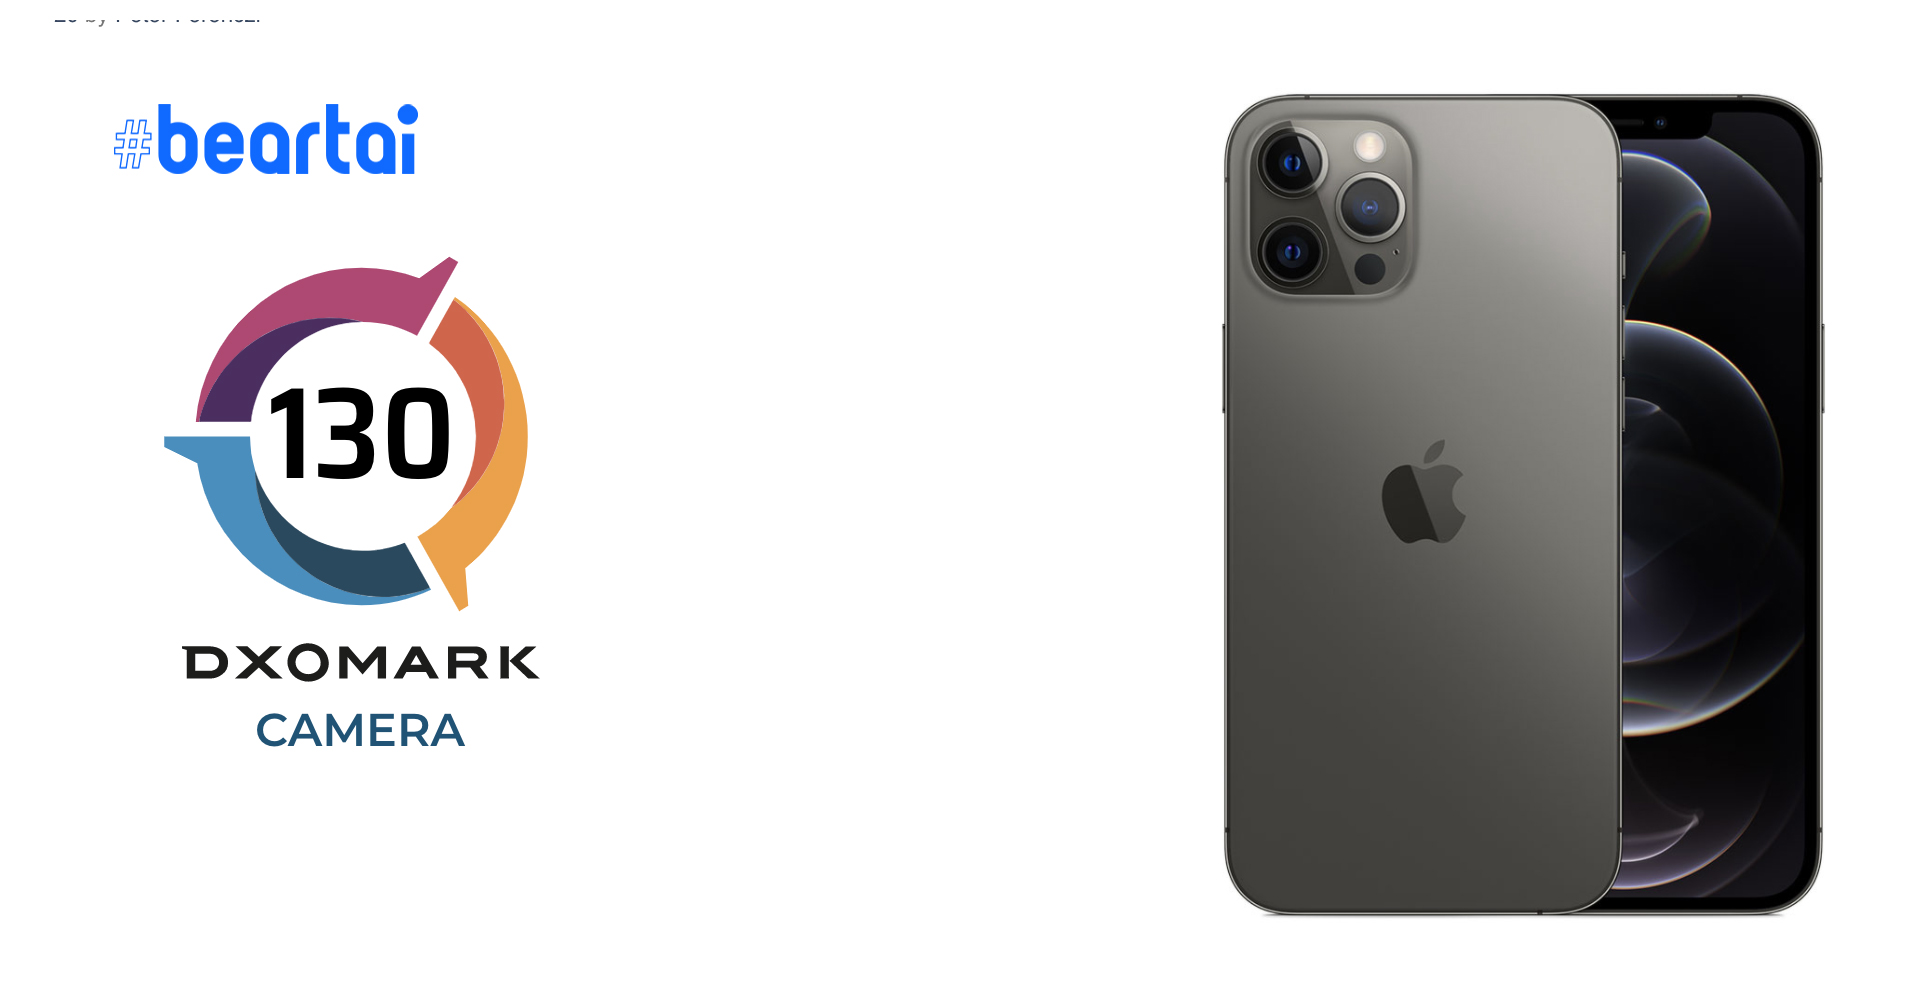 DXOMARK เผยคะแนนกล้อง iPhone 12 Pro Max ได้ 130 คะแนน อยู่อันดับ 4 ของตาราง